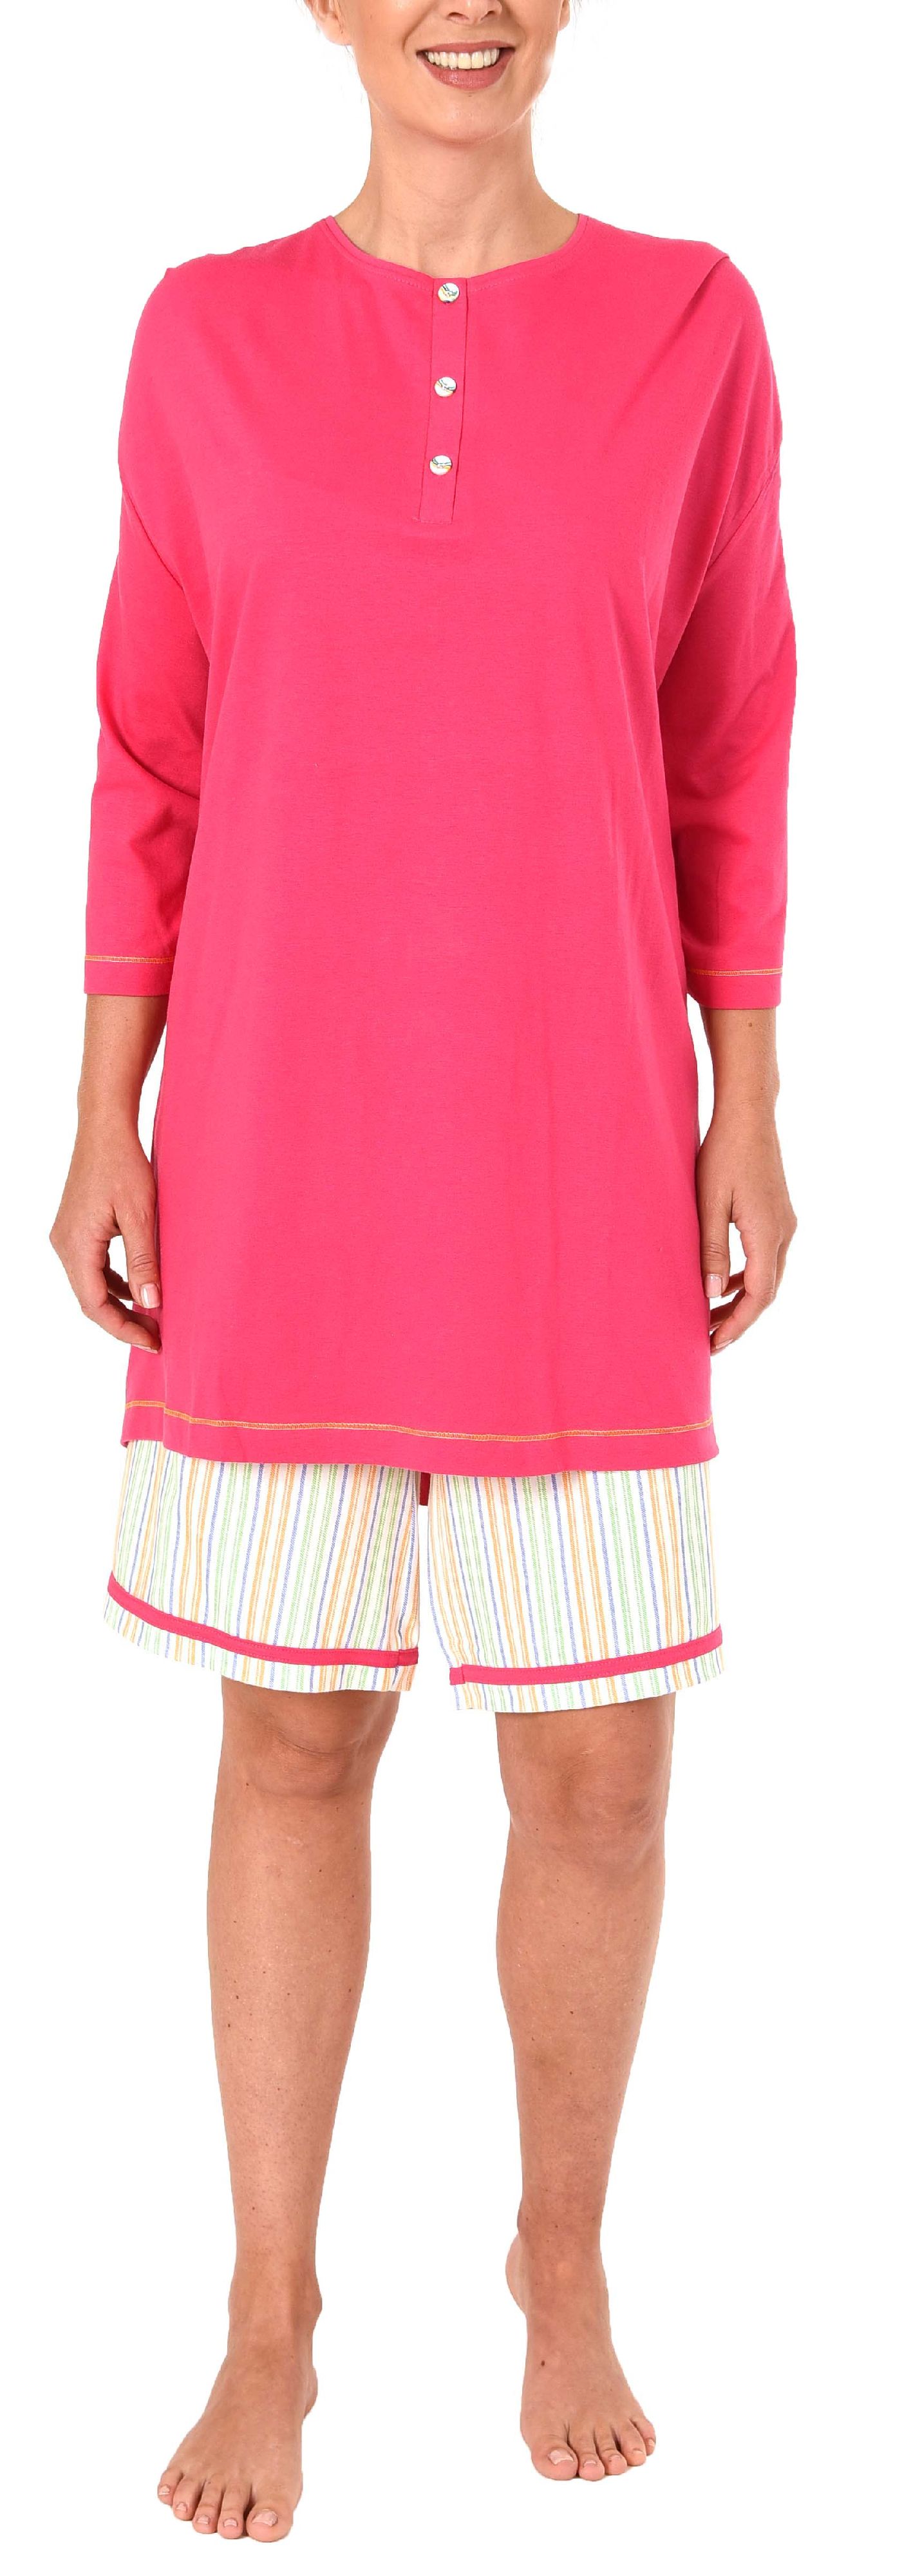 Shorty für Damen, eleganter Pyjama kurzarm in Übergrößen  – 52502